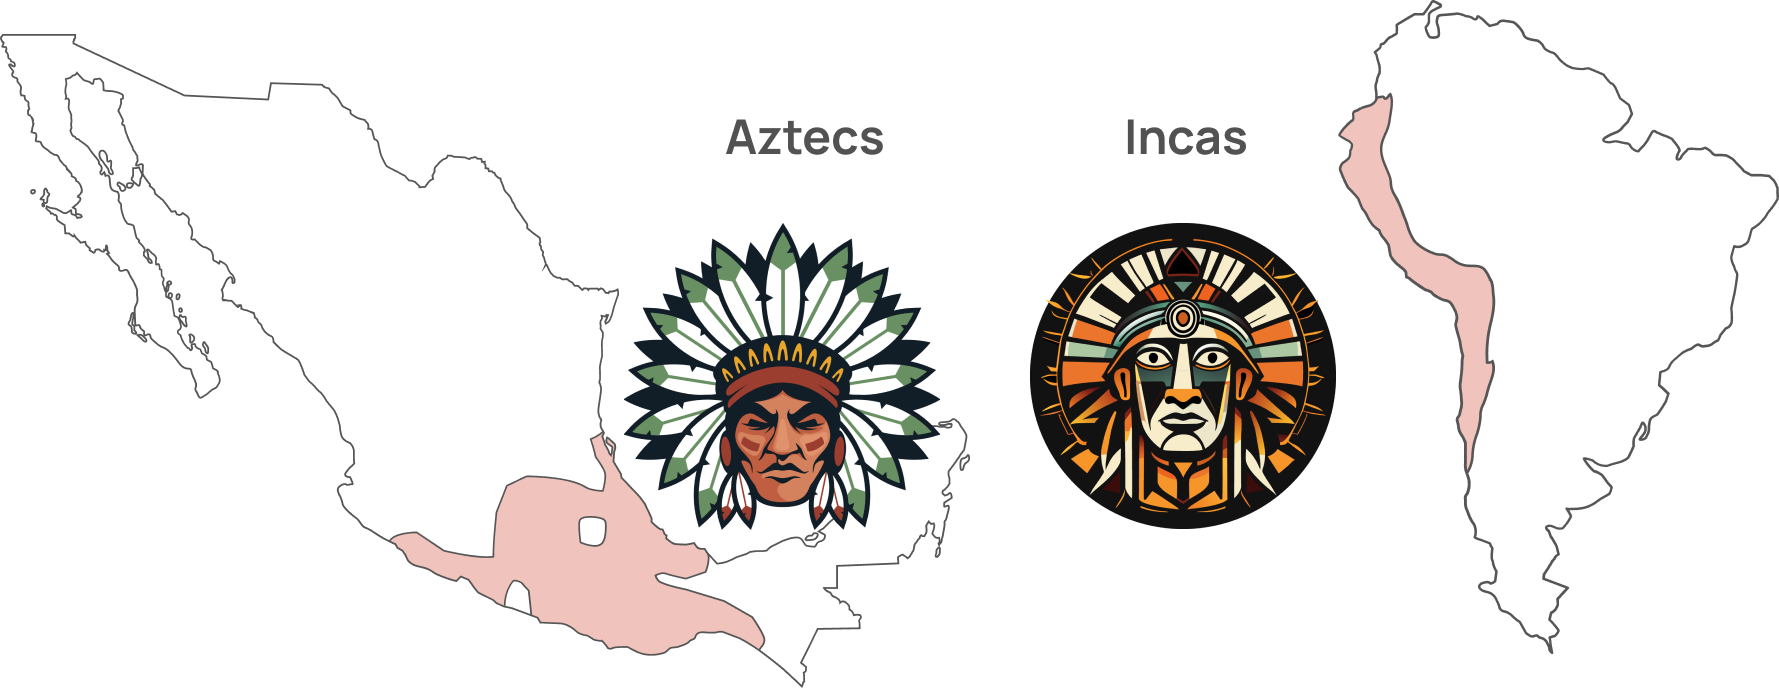 Aztecs-Incas-map